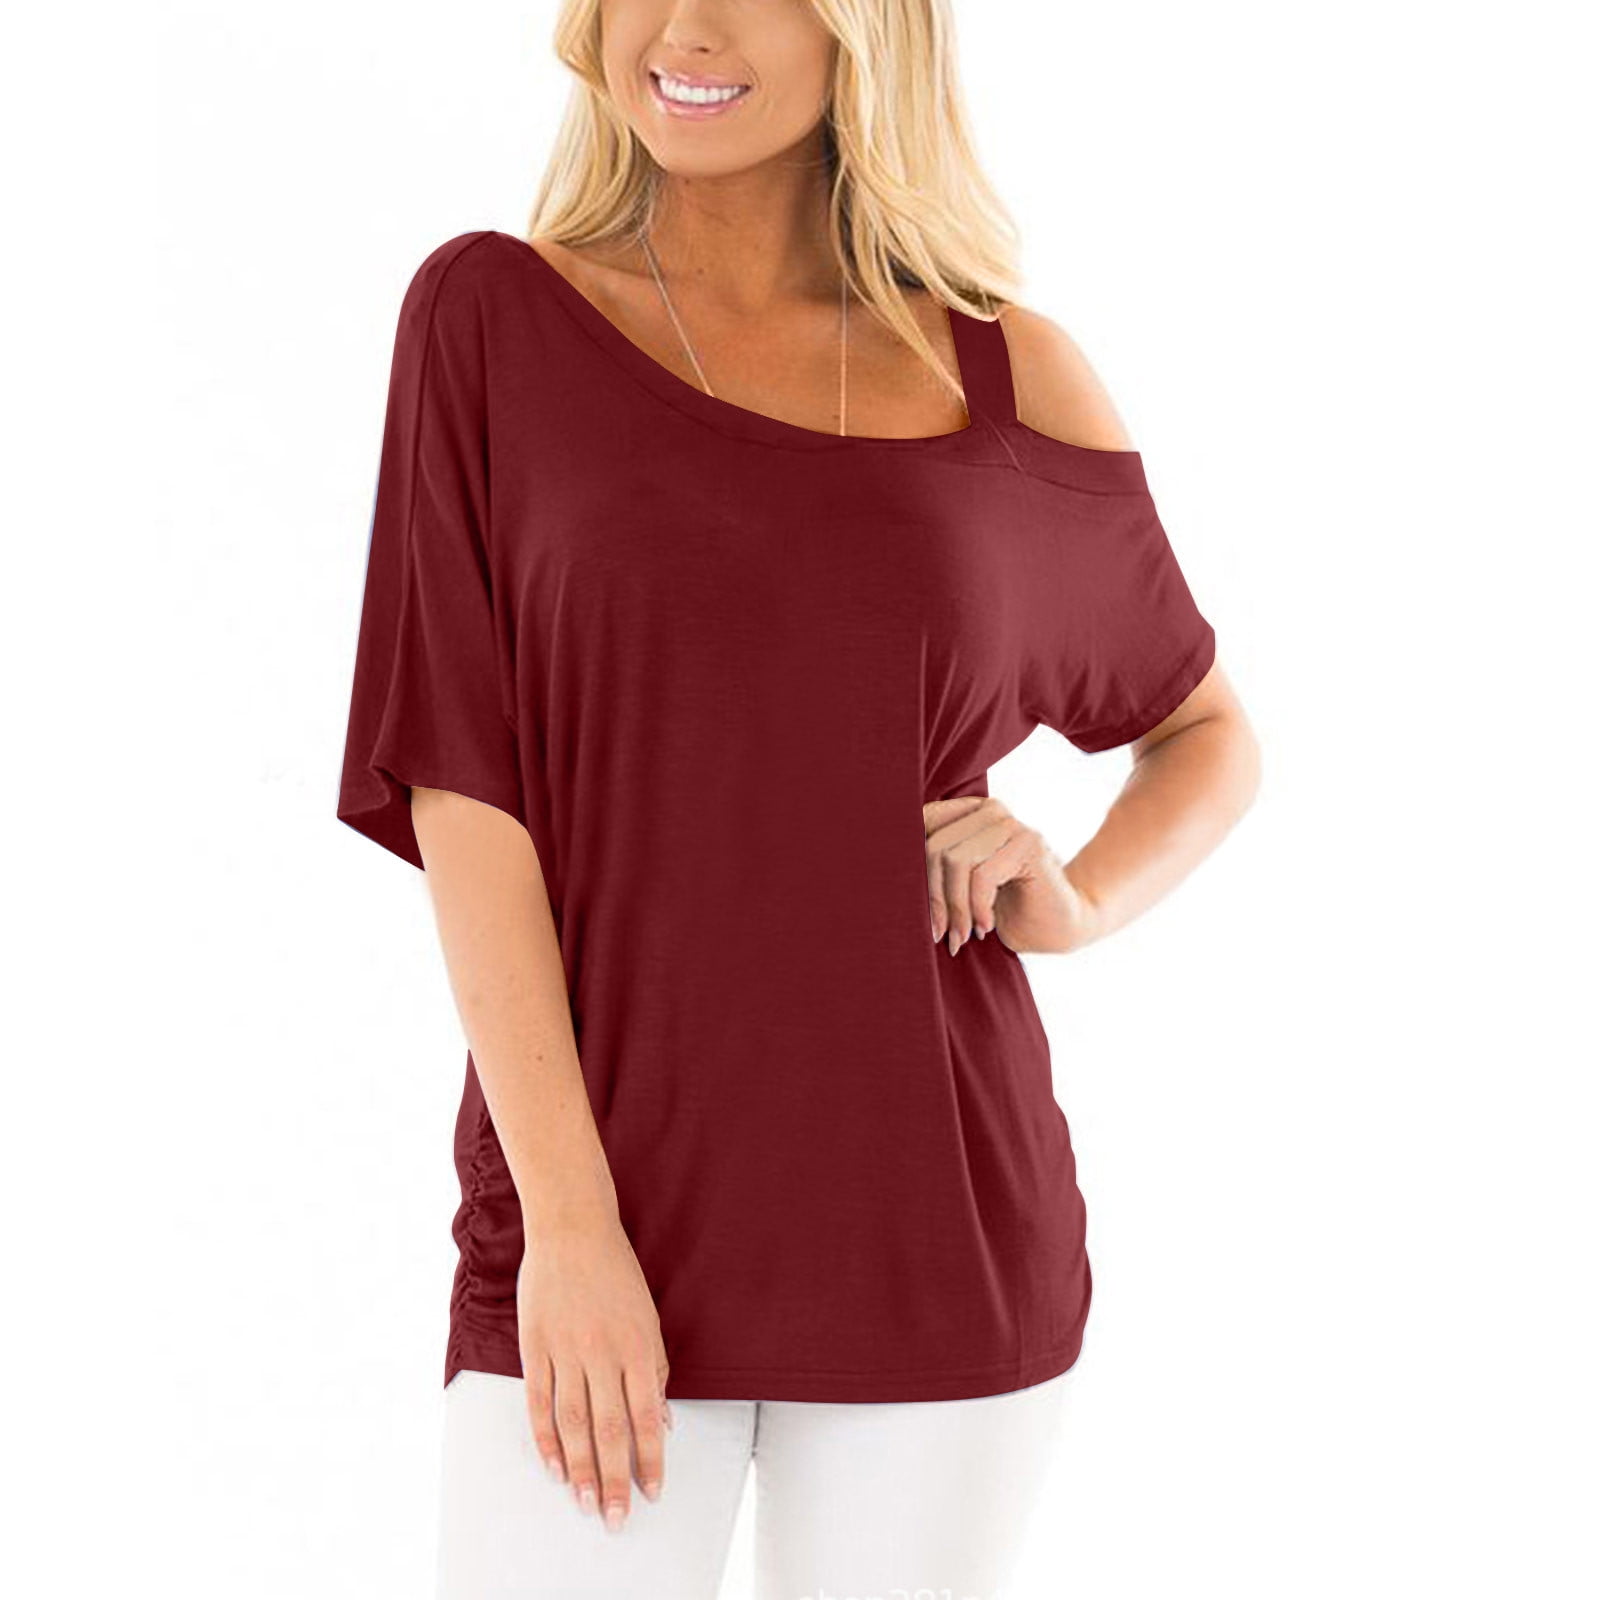 QWANG Women's Summer T-shirt Casual Short Sleeve Asymmetric Solid Color  Loose Top